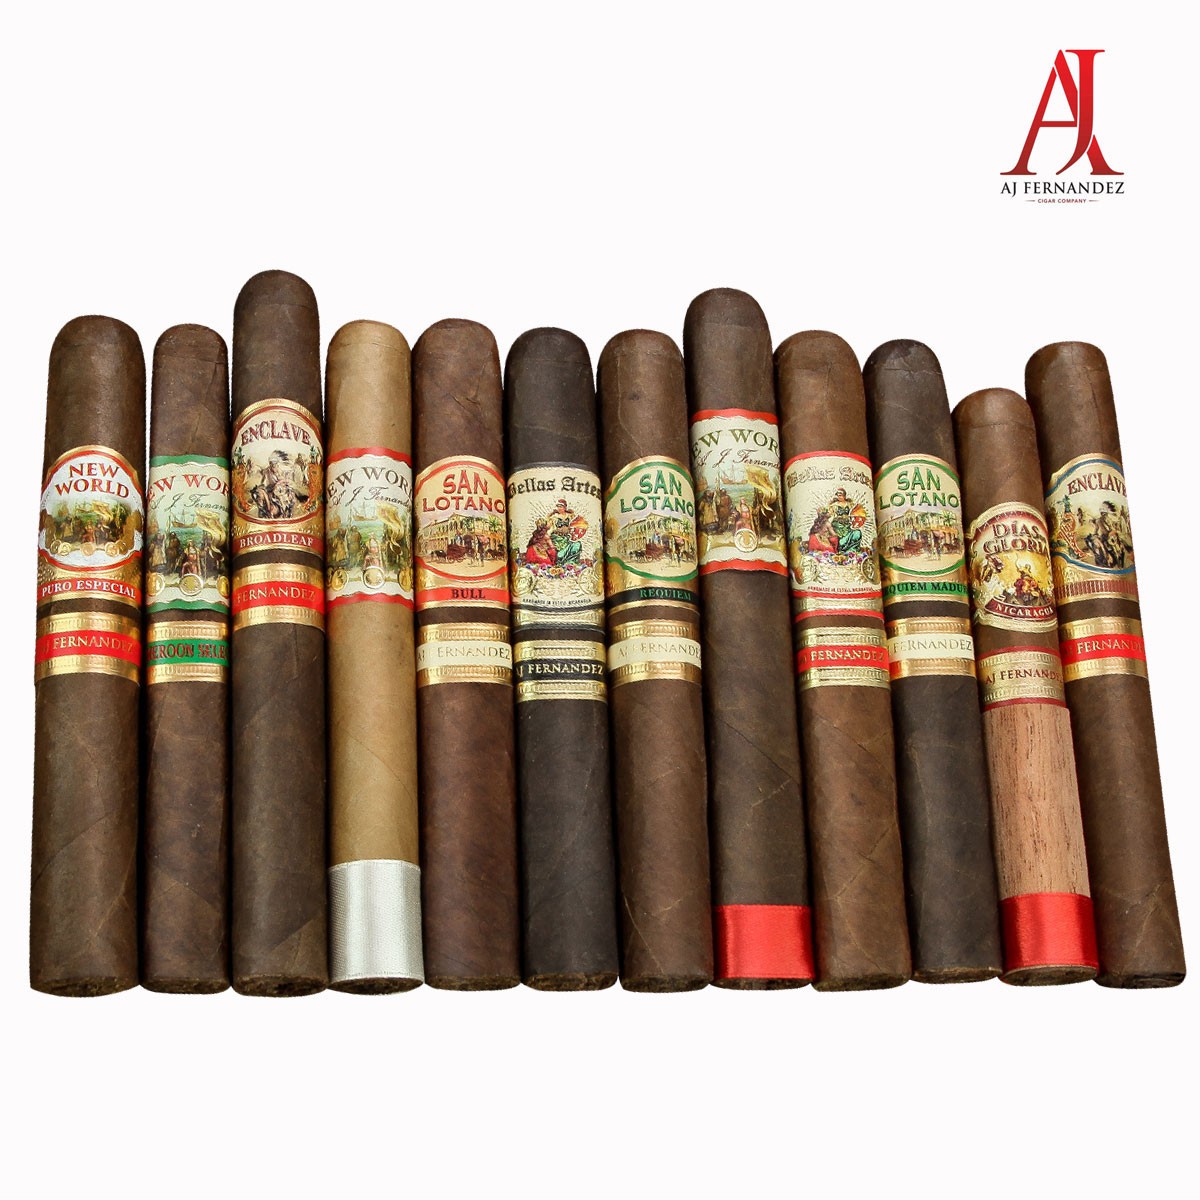 AJ Fernandez Cigars.